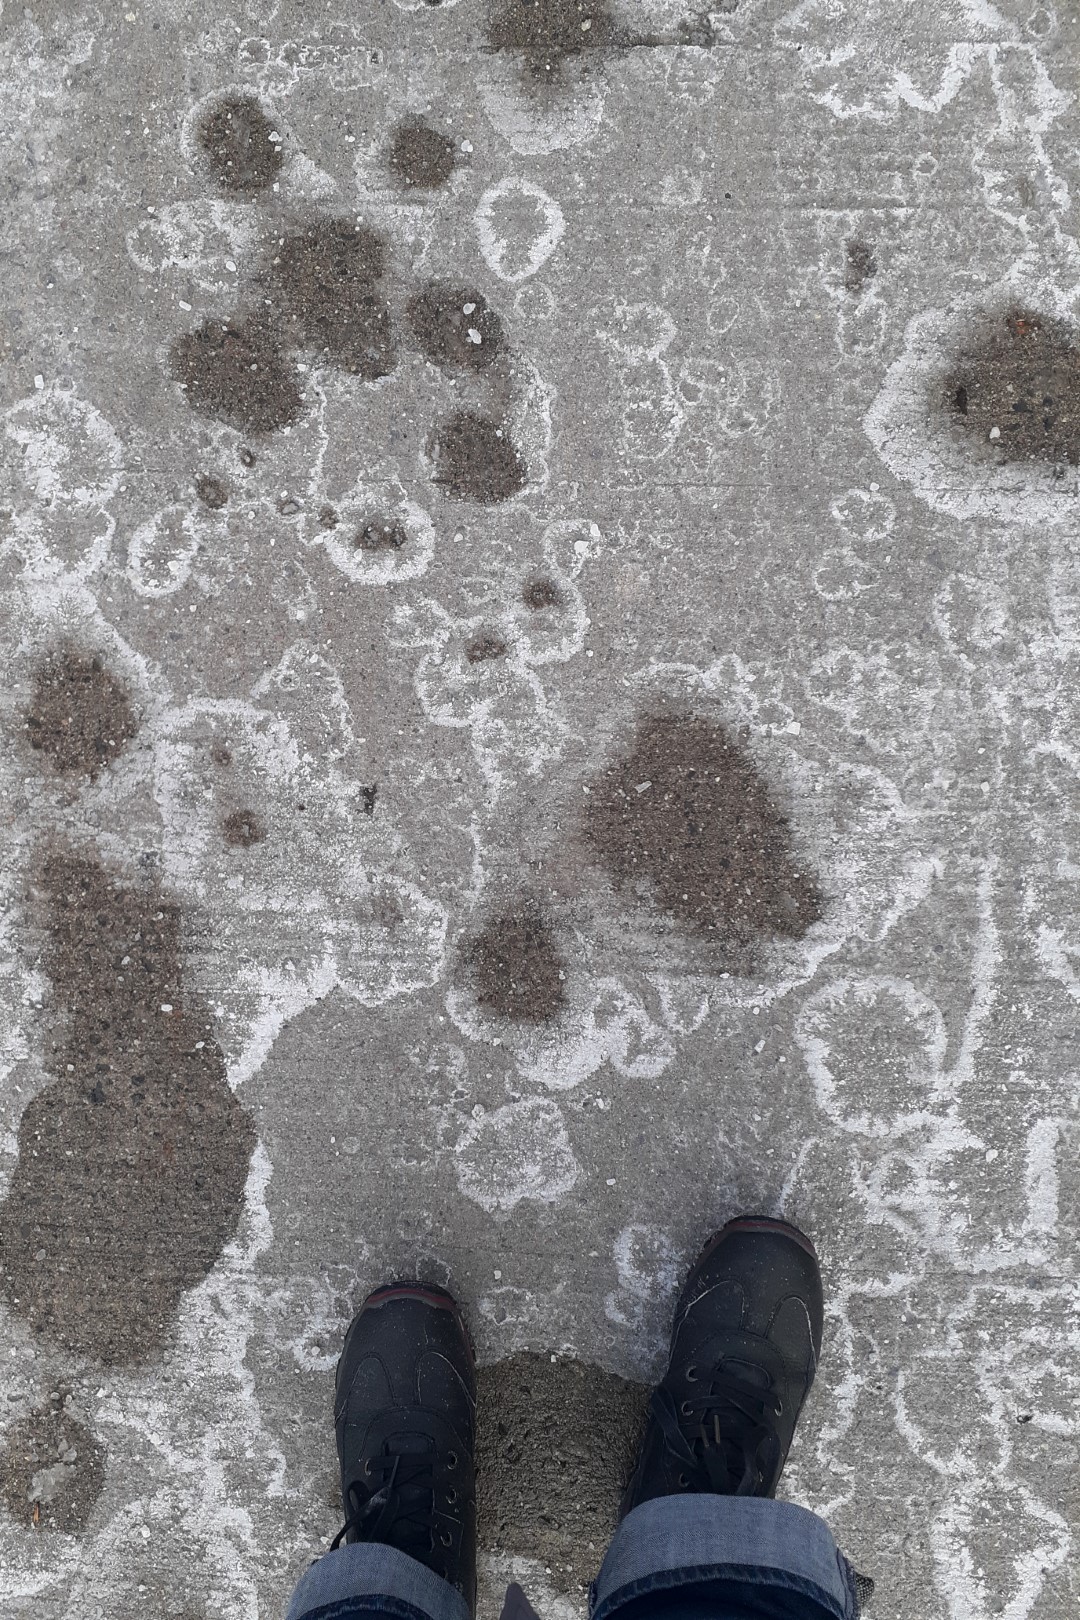 Salt stains on sidewalk, Carling Avenue, Ottawa, November 2022